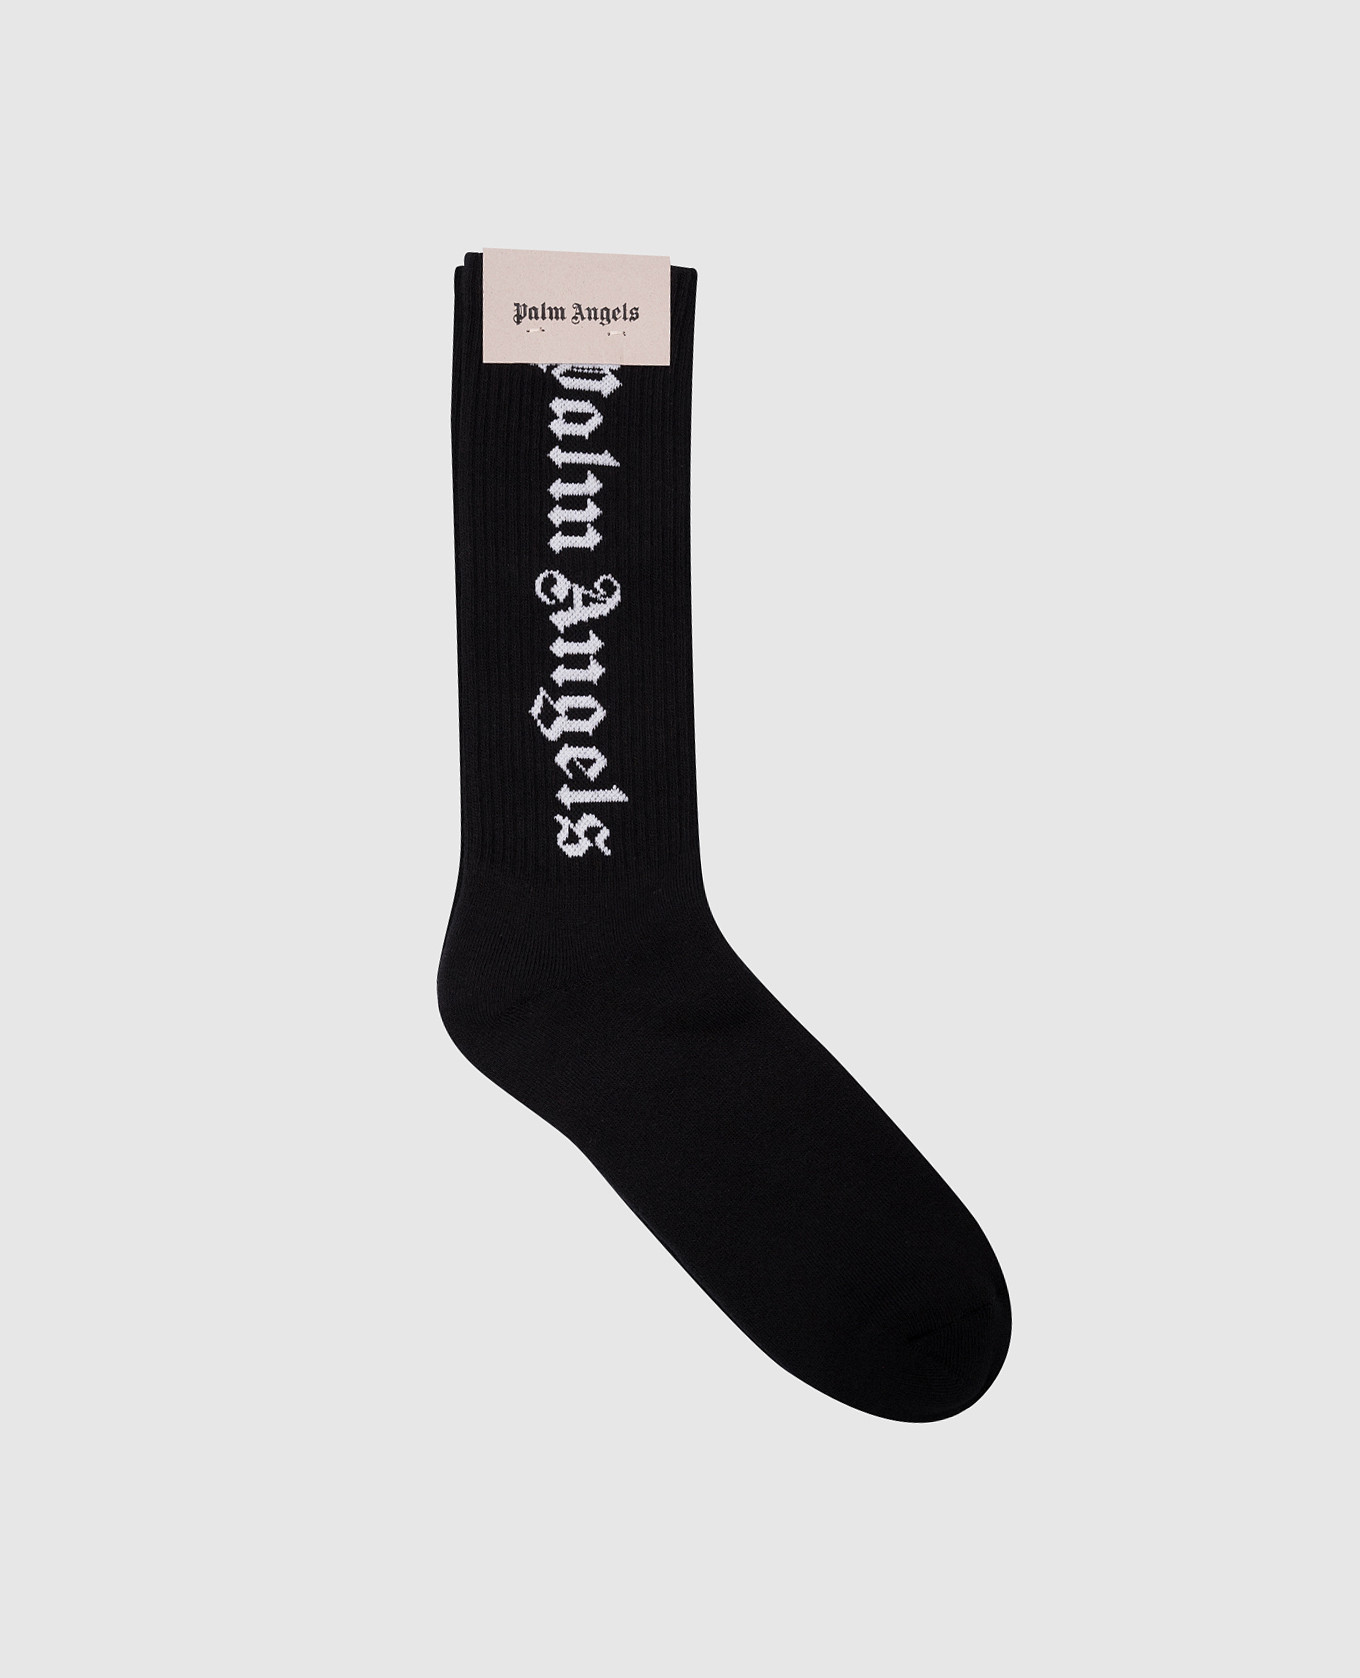 Black socks with logo